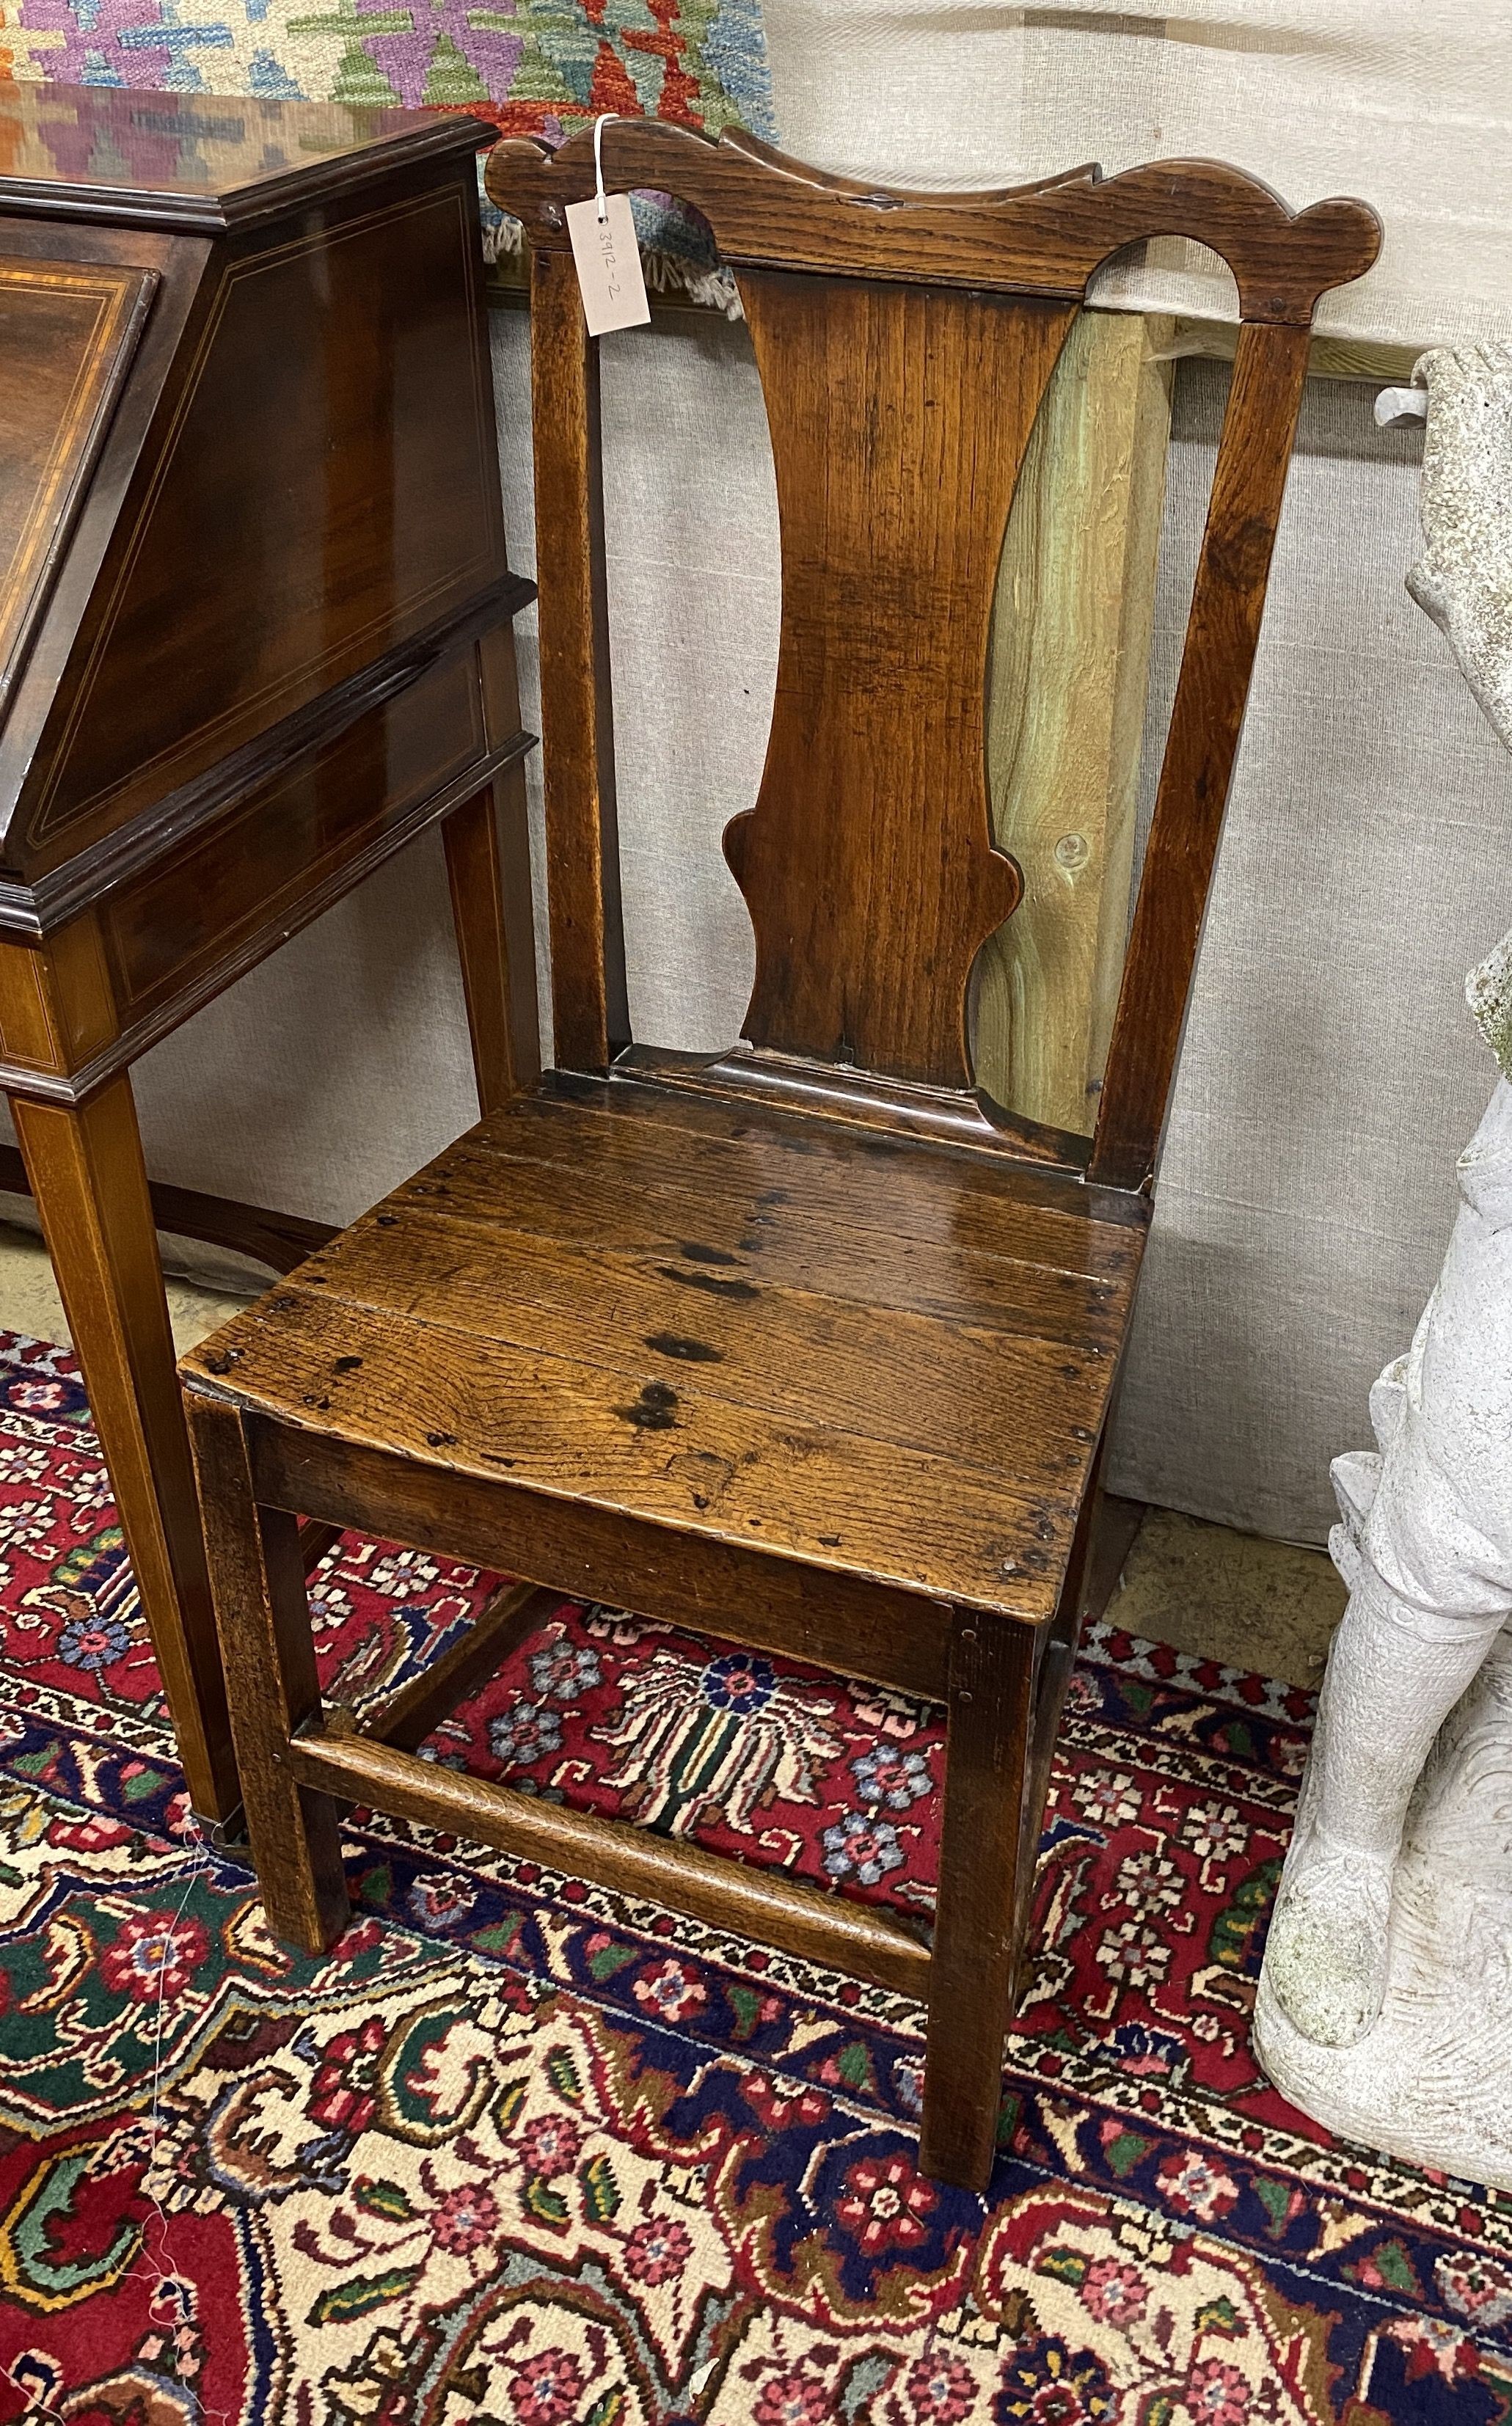 An 18th century oak wood seat chair